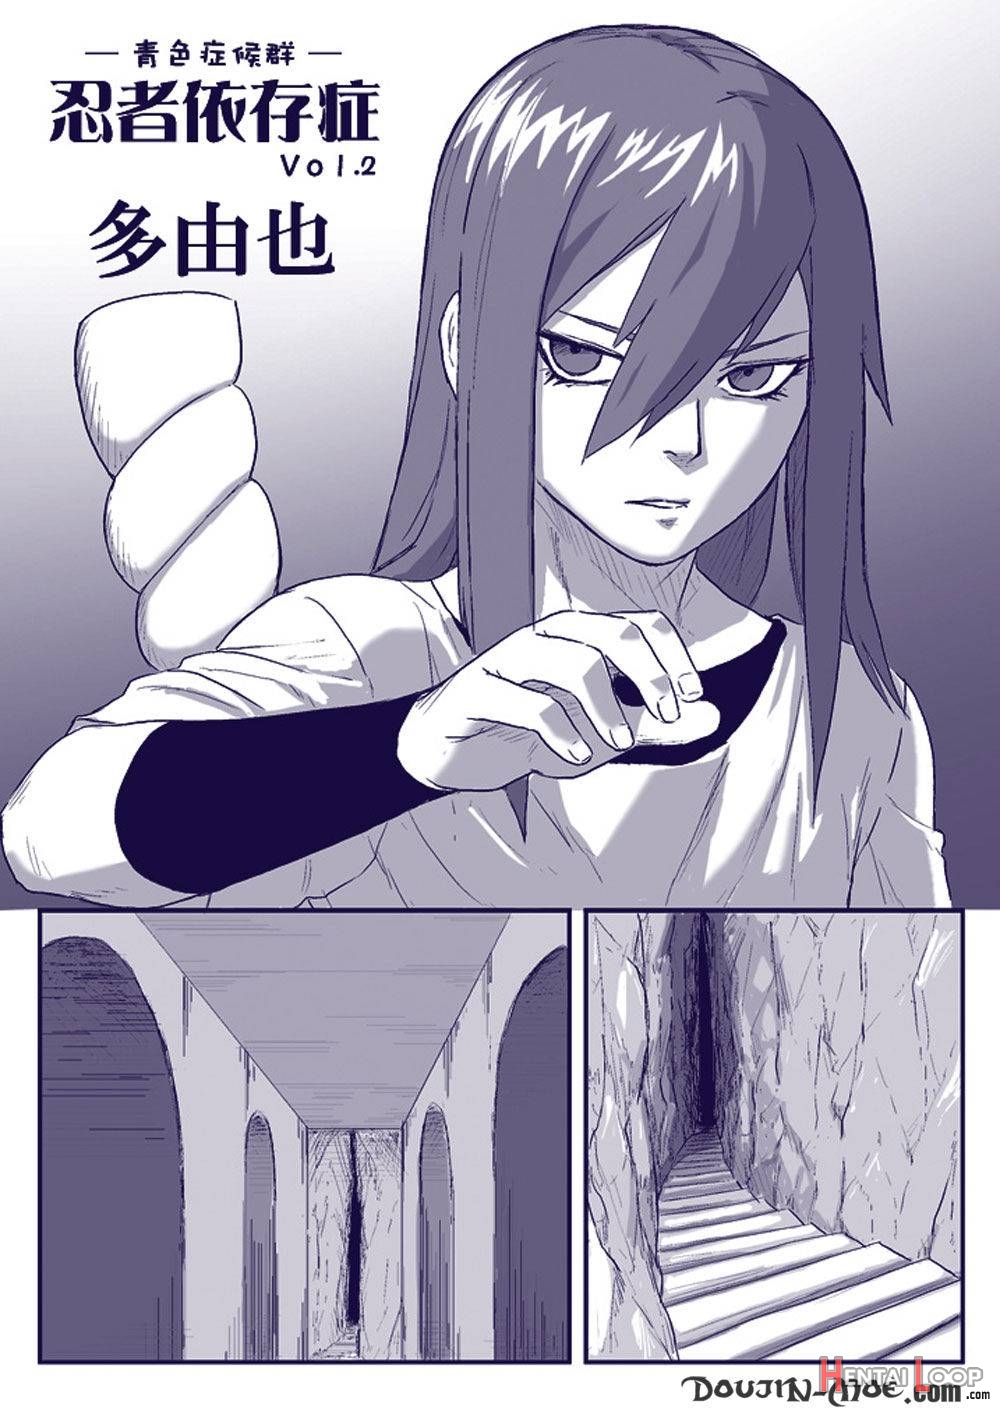 Ninja Izonshou Vol. 2 page 4